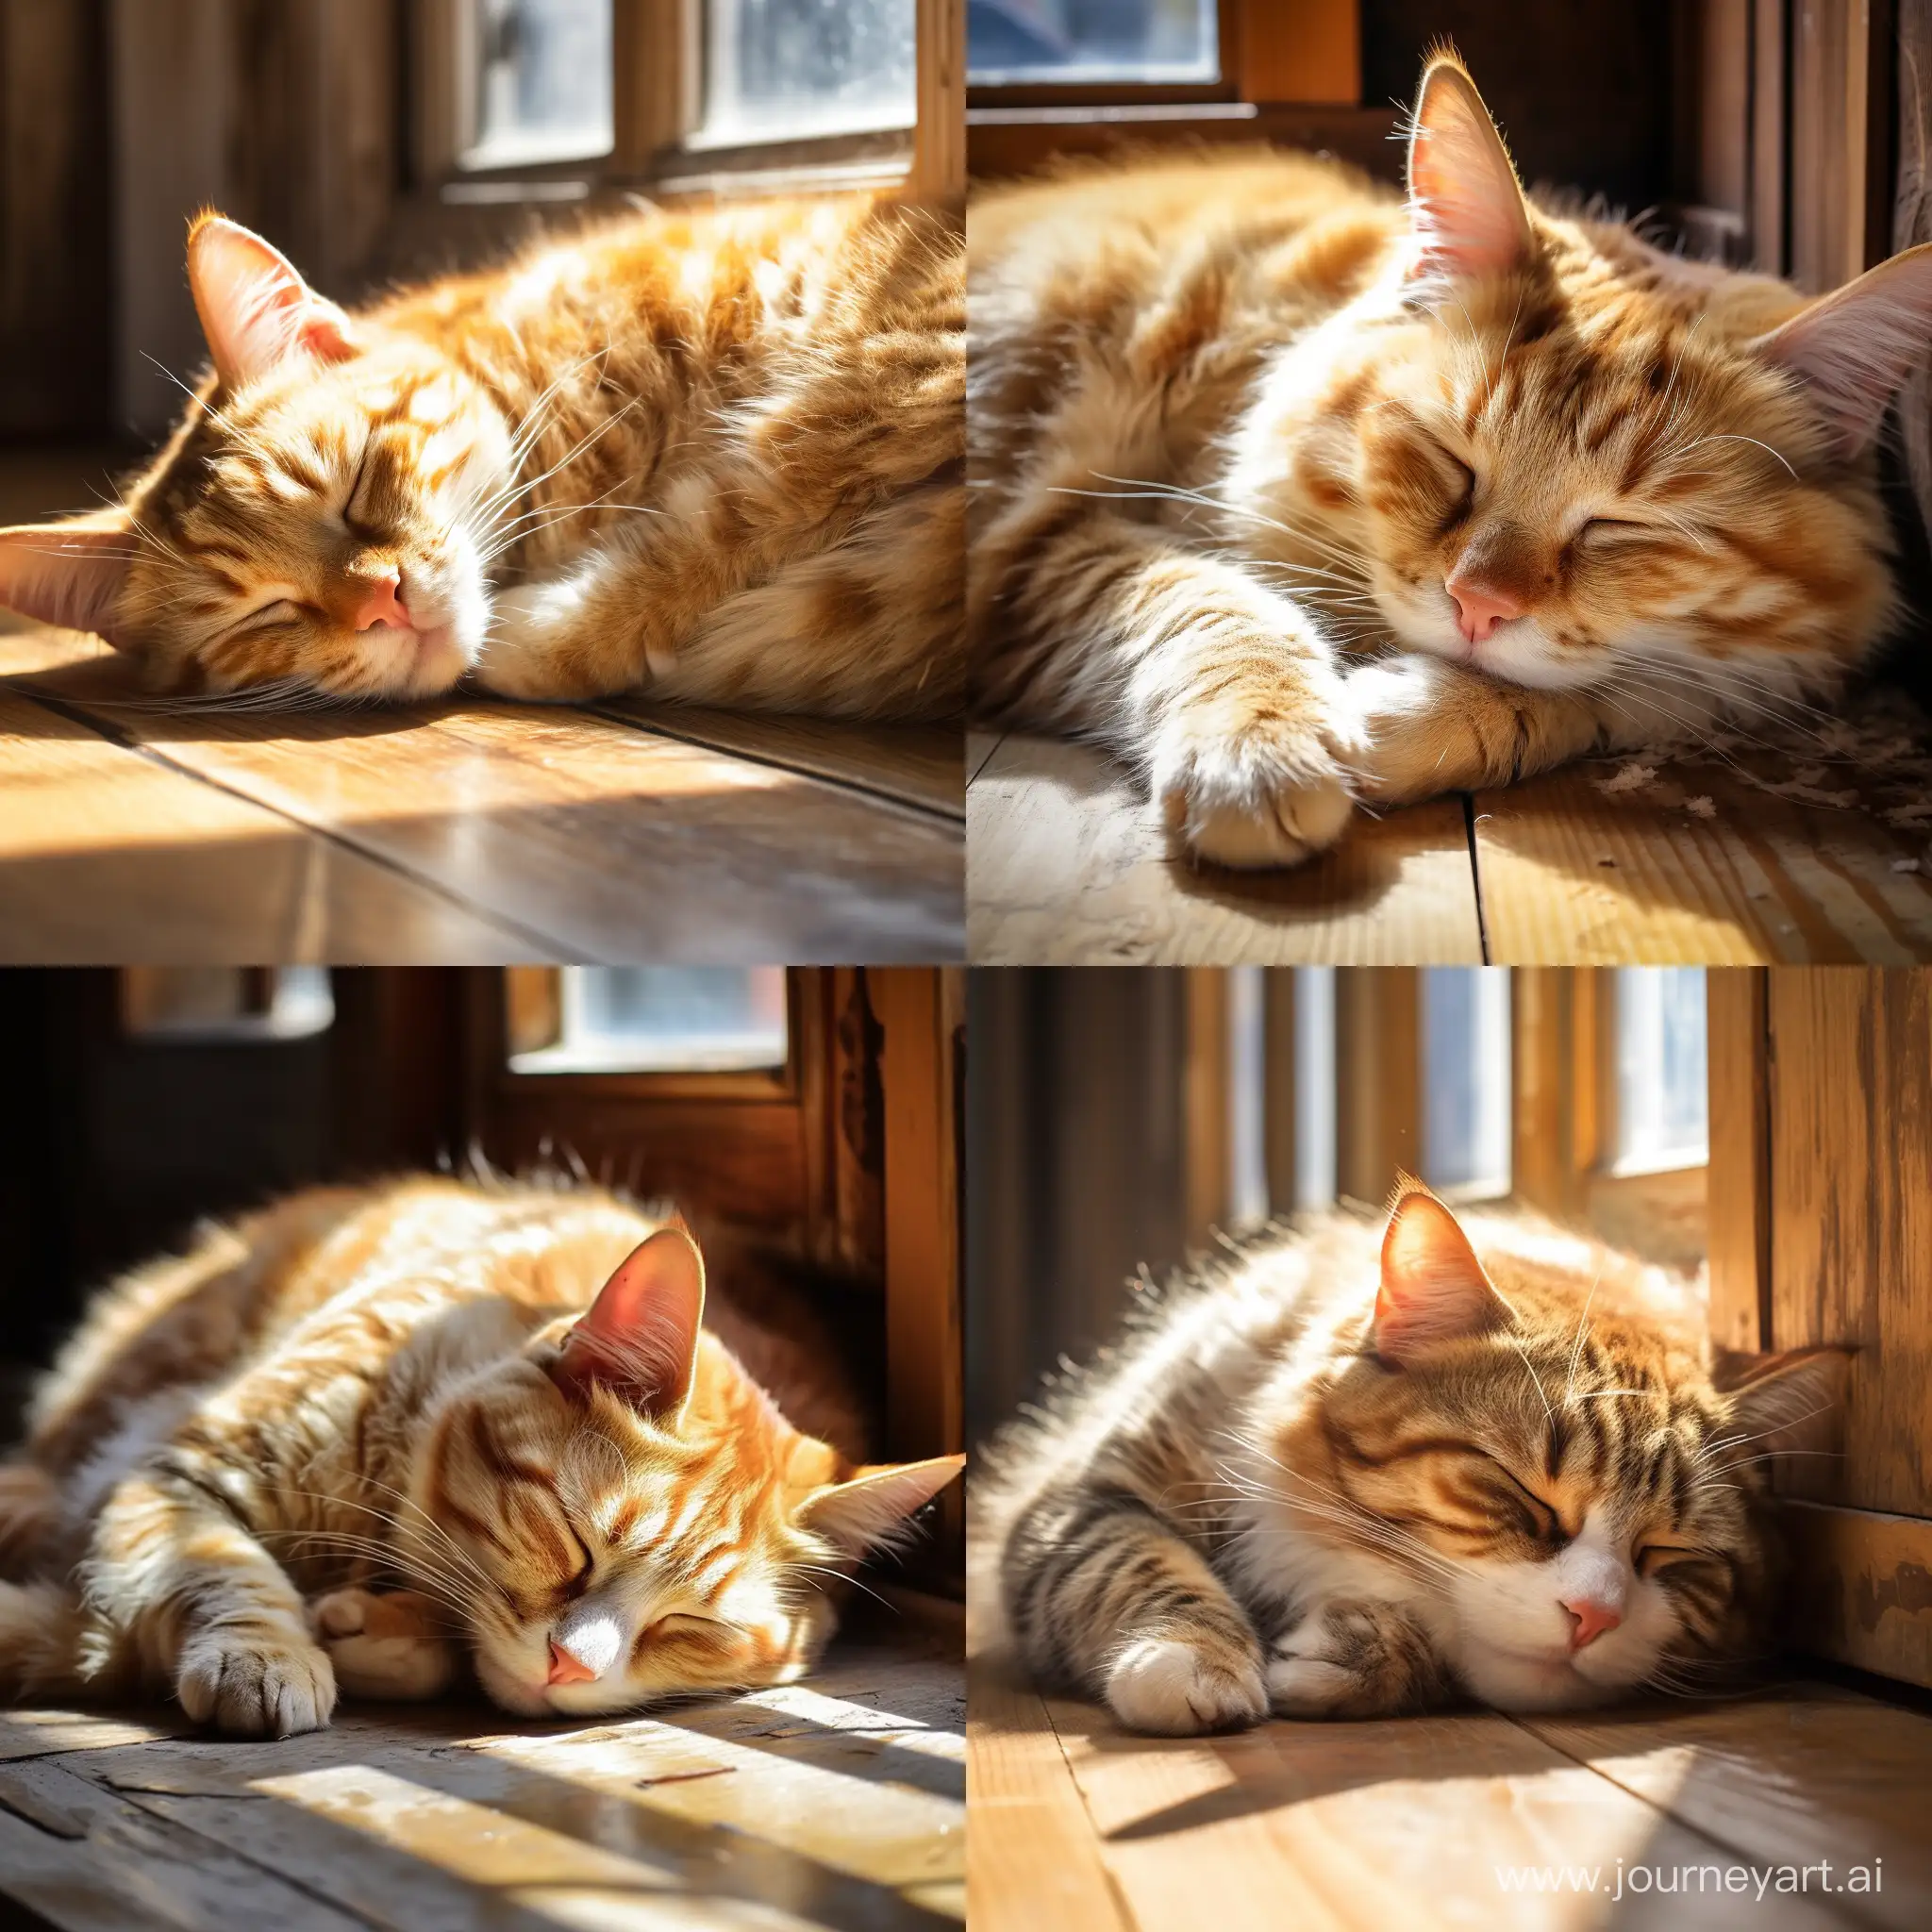 Tranquil-Cat-Nap-on-Cozy-Wooden-Floor